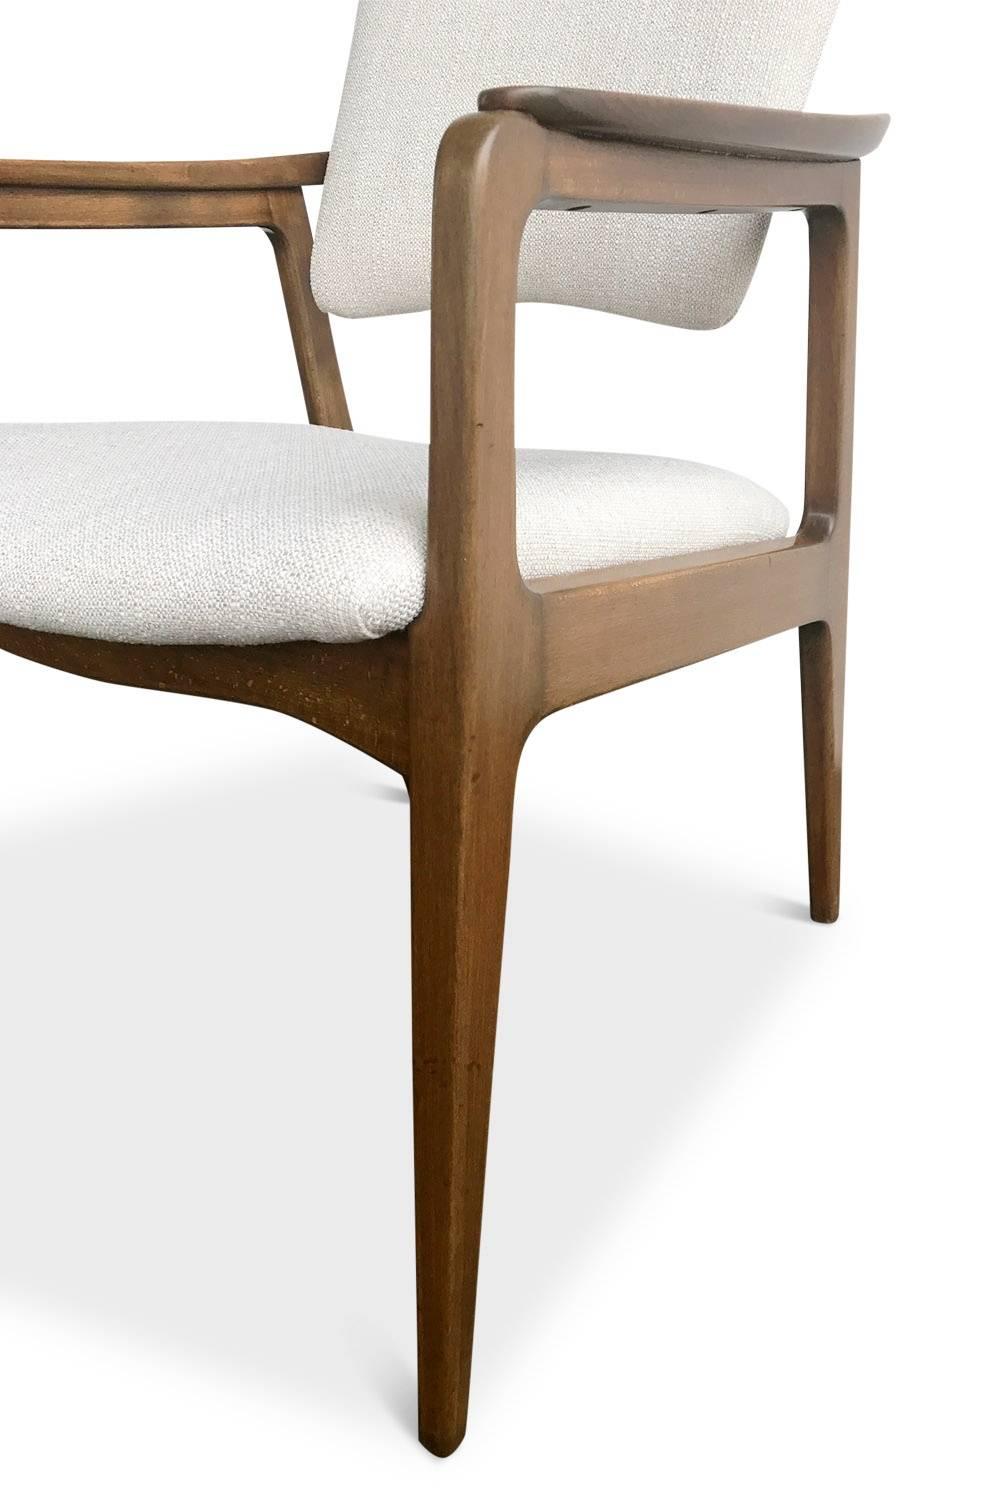 Mid-20th Century Restored Tilt Back Chairs by Sigvard Bernadotte for France & Daverkosen